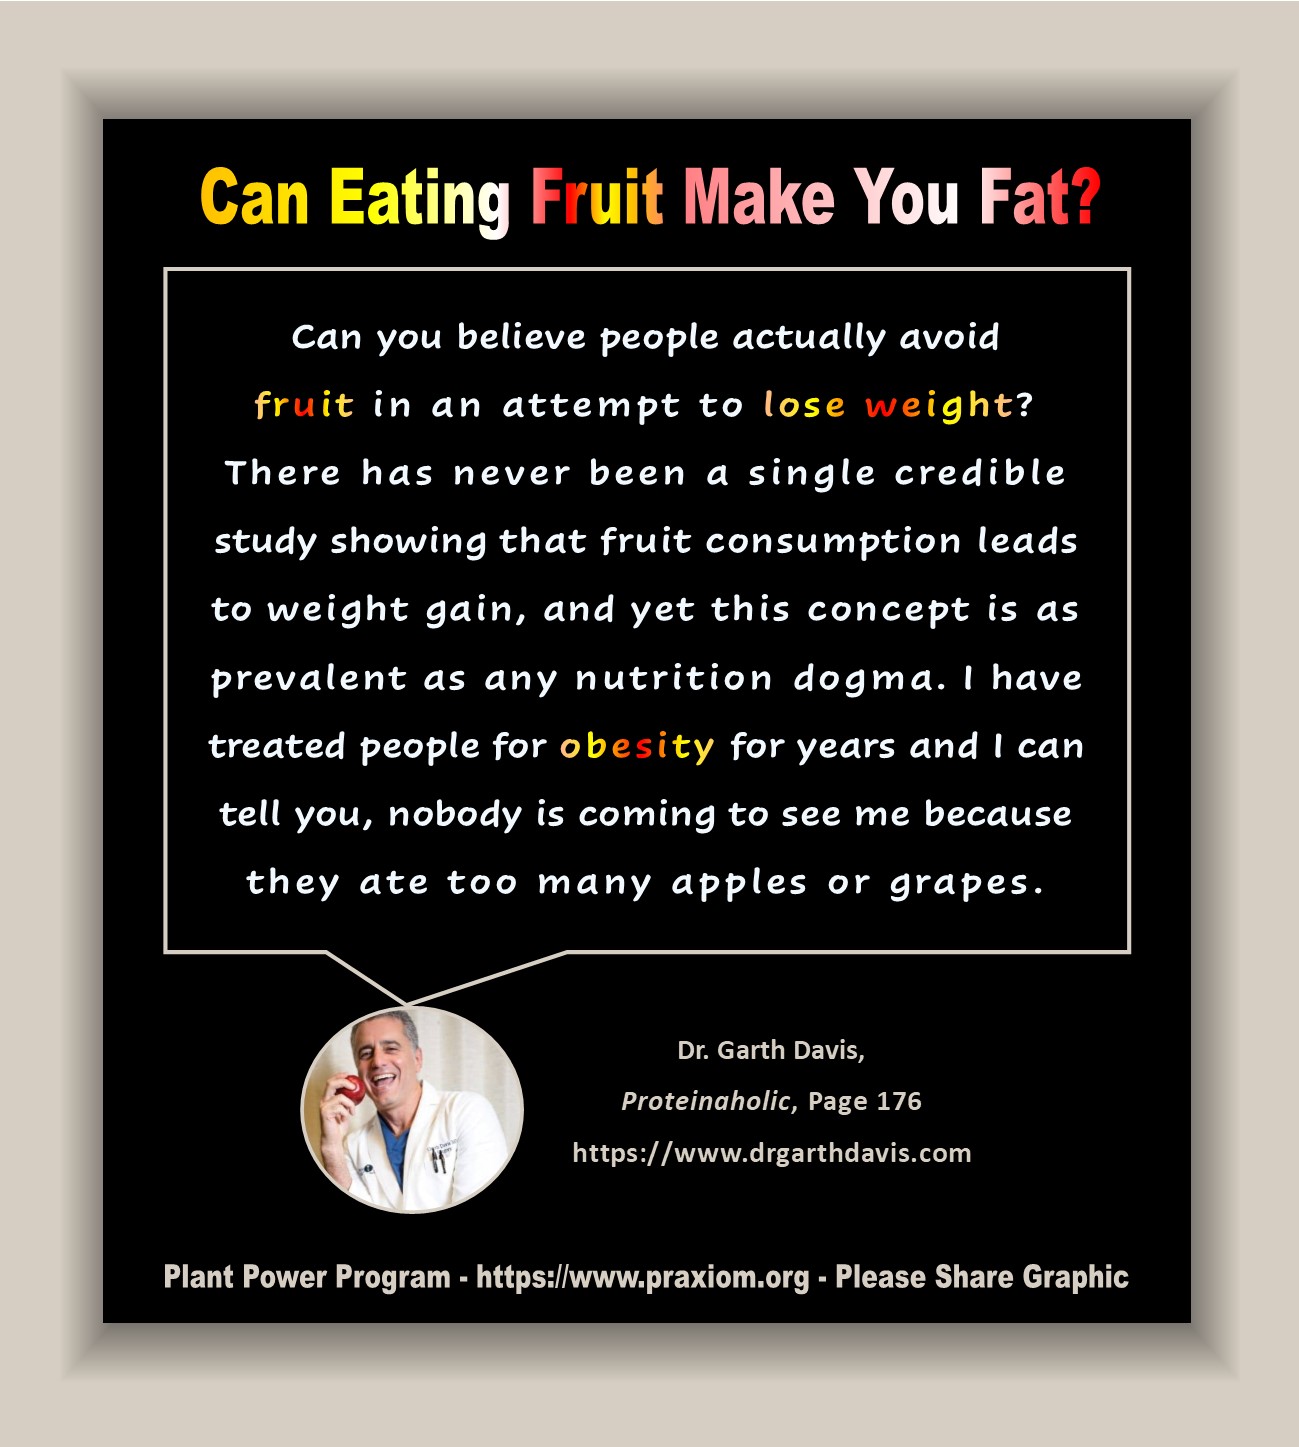 Fruit Does Not Cause Obesity - Dr. Garth Davis